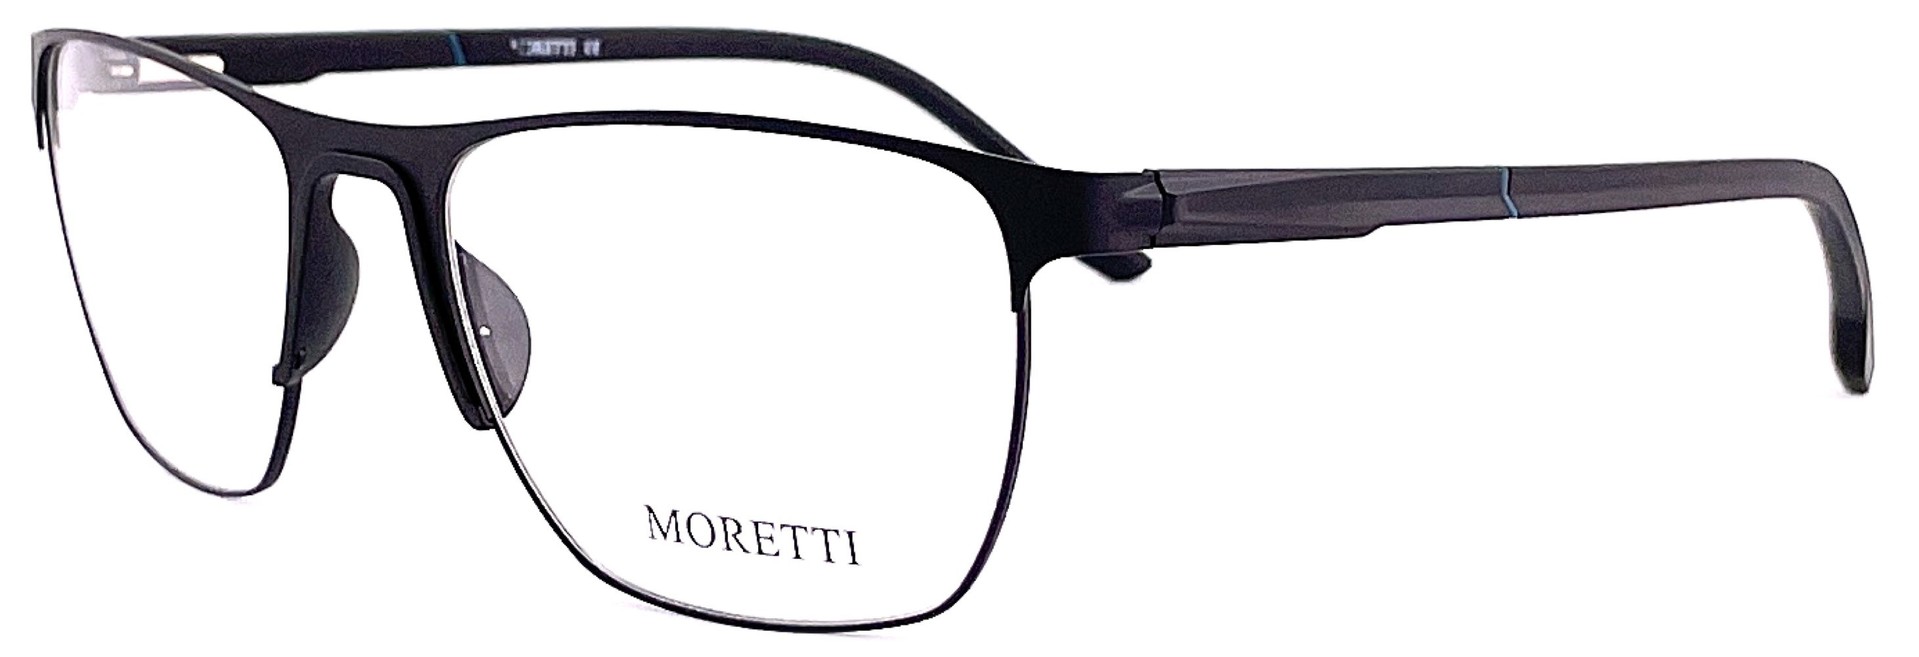 Moretti HC05-10 C1A 2